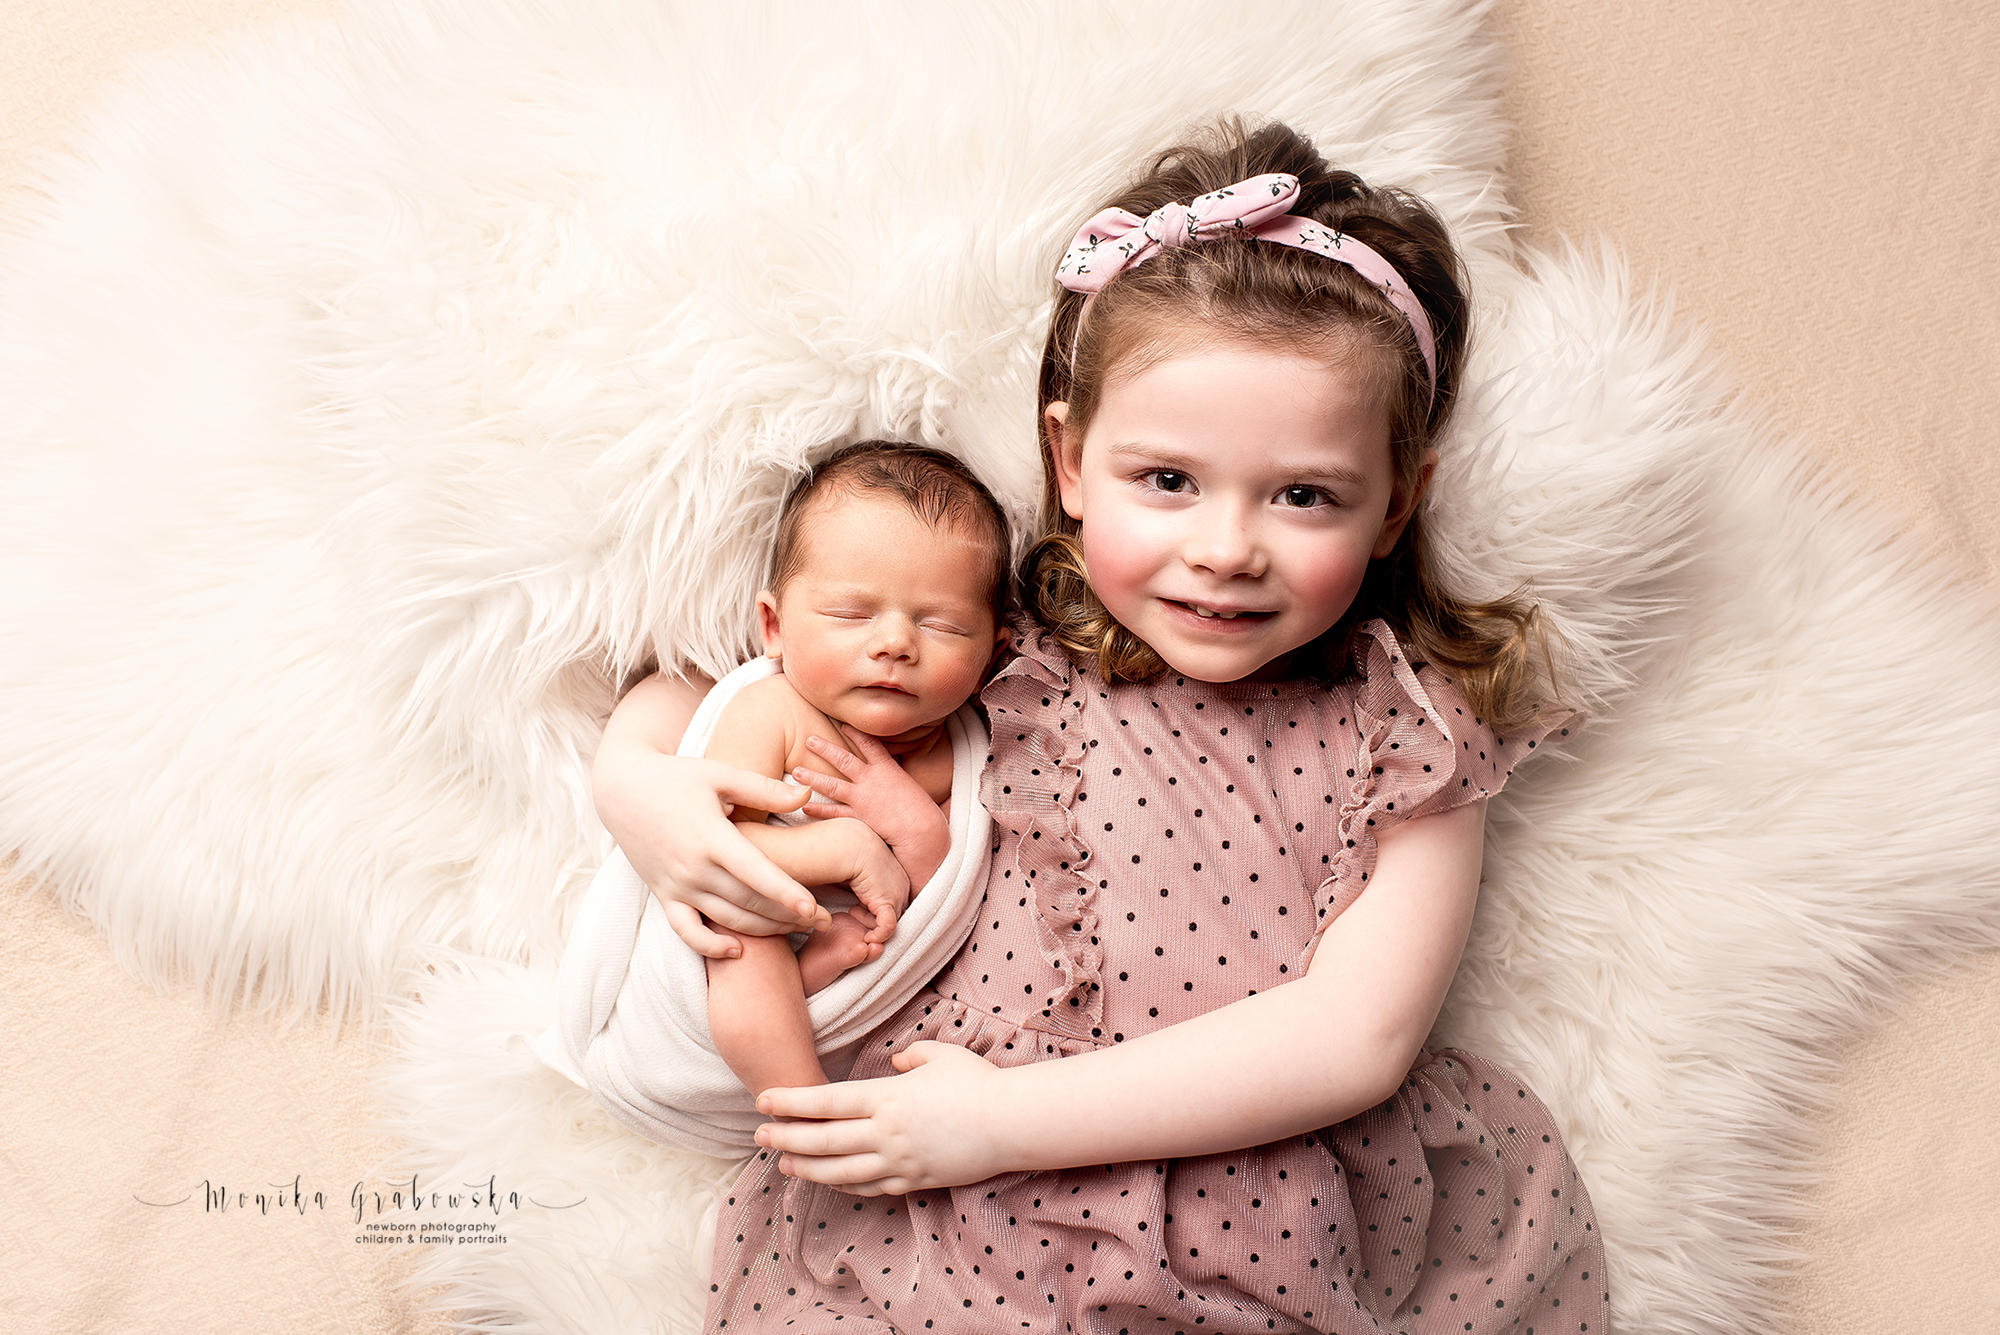 Portrait of siblings, newborn baby sister